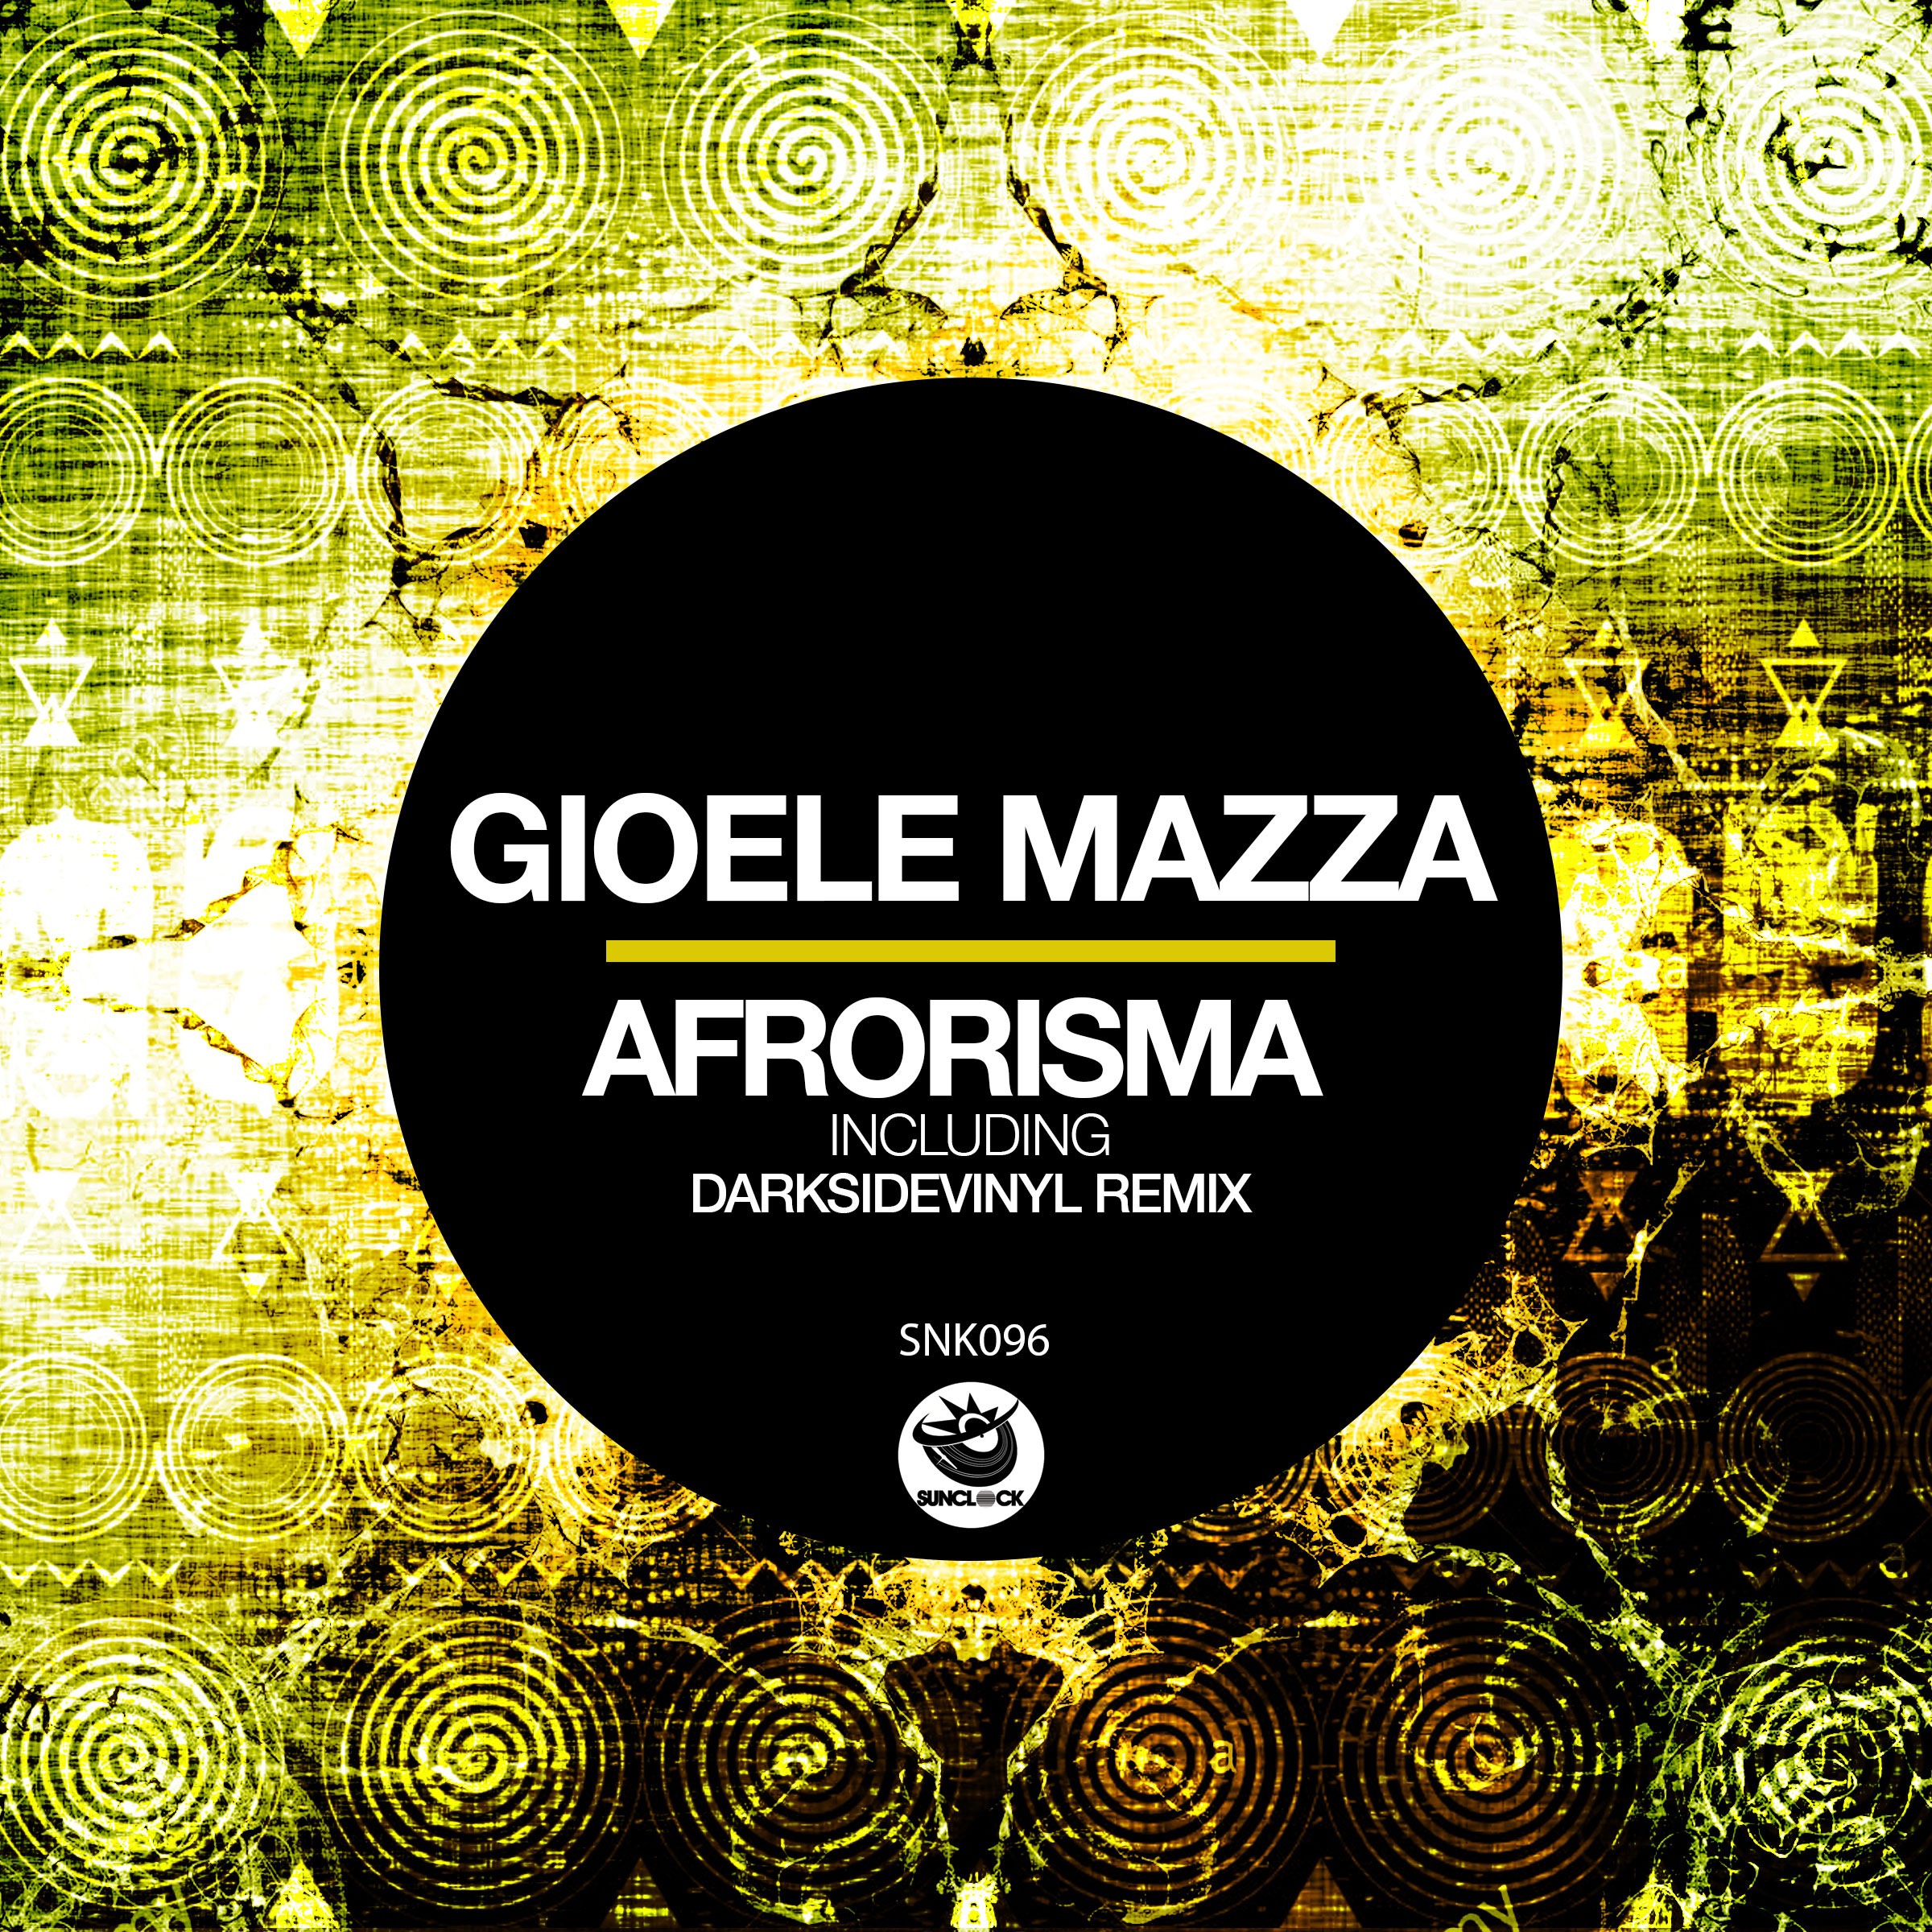 Gioele Mazza - Afrorisma (incl. Darksidevinyl Remix) - SNK096 Cover